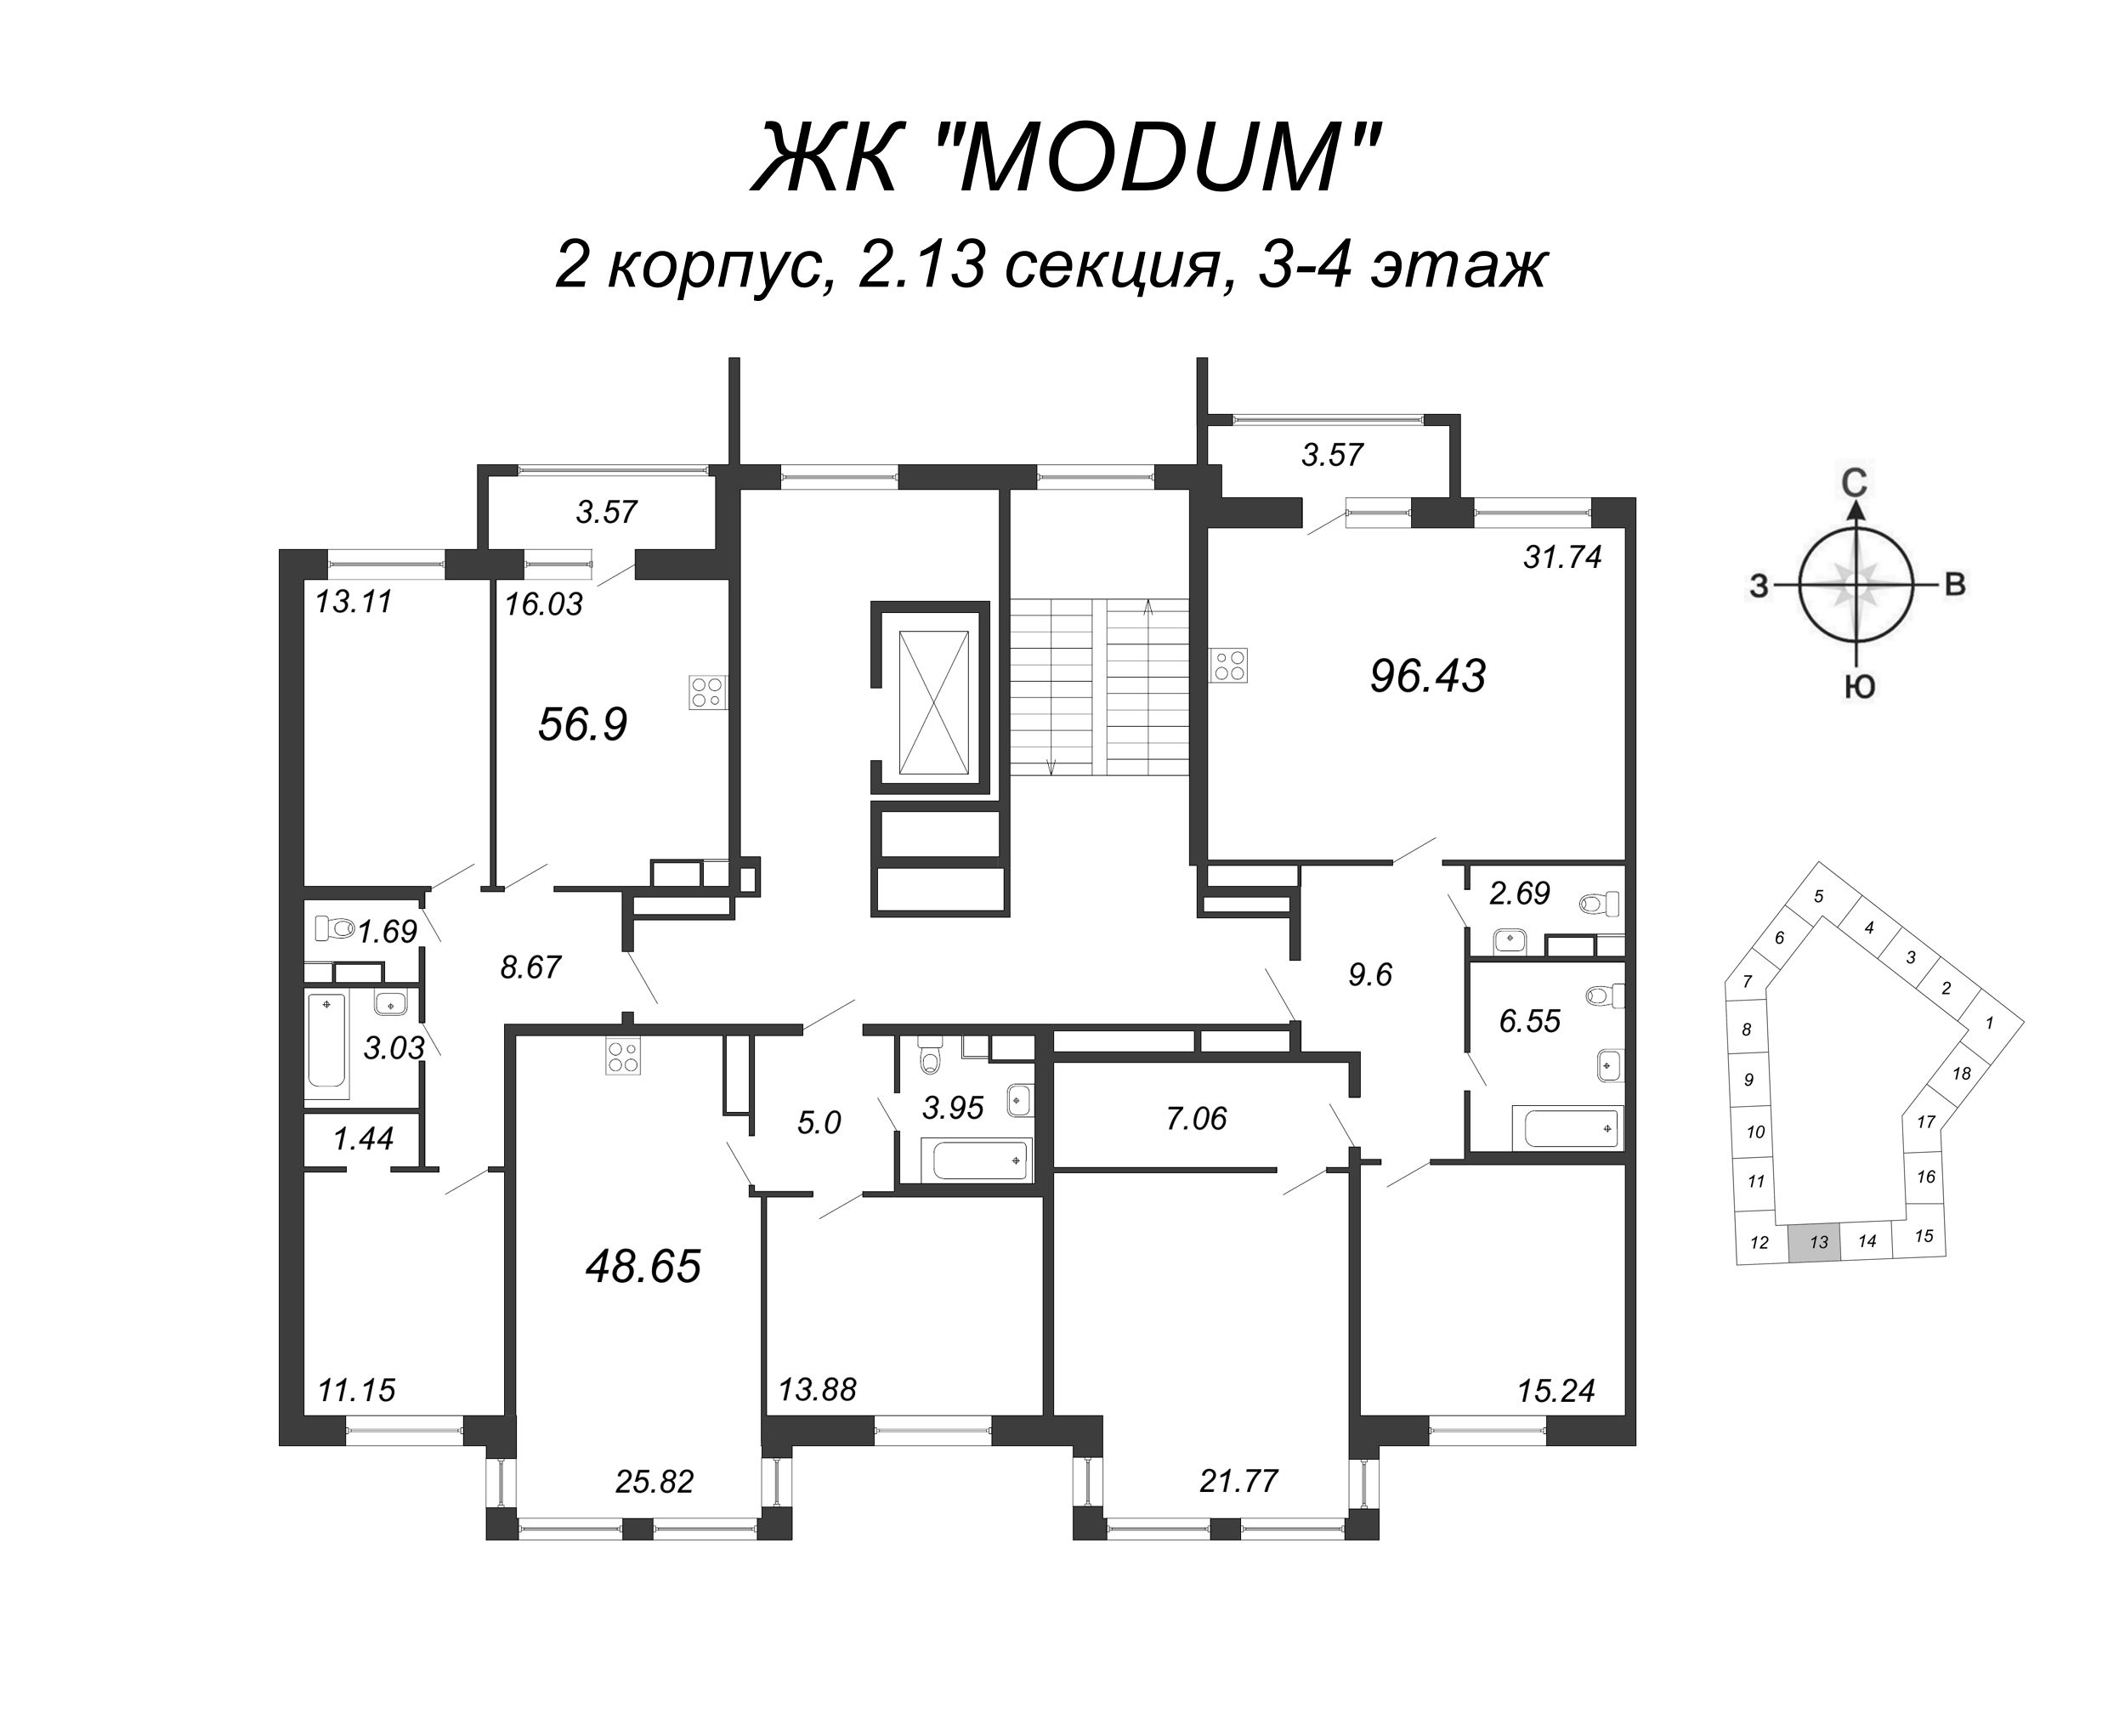 2-комнатная (Евро) квартира, 48.65 м² - планировка этажа